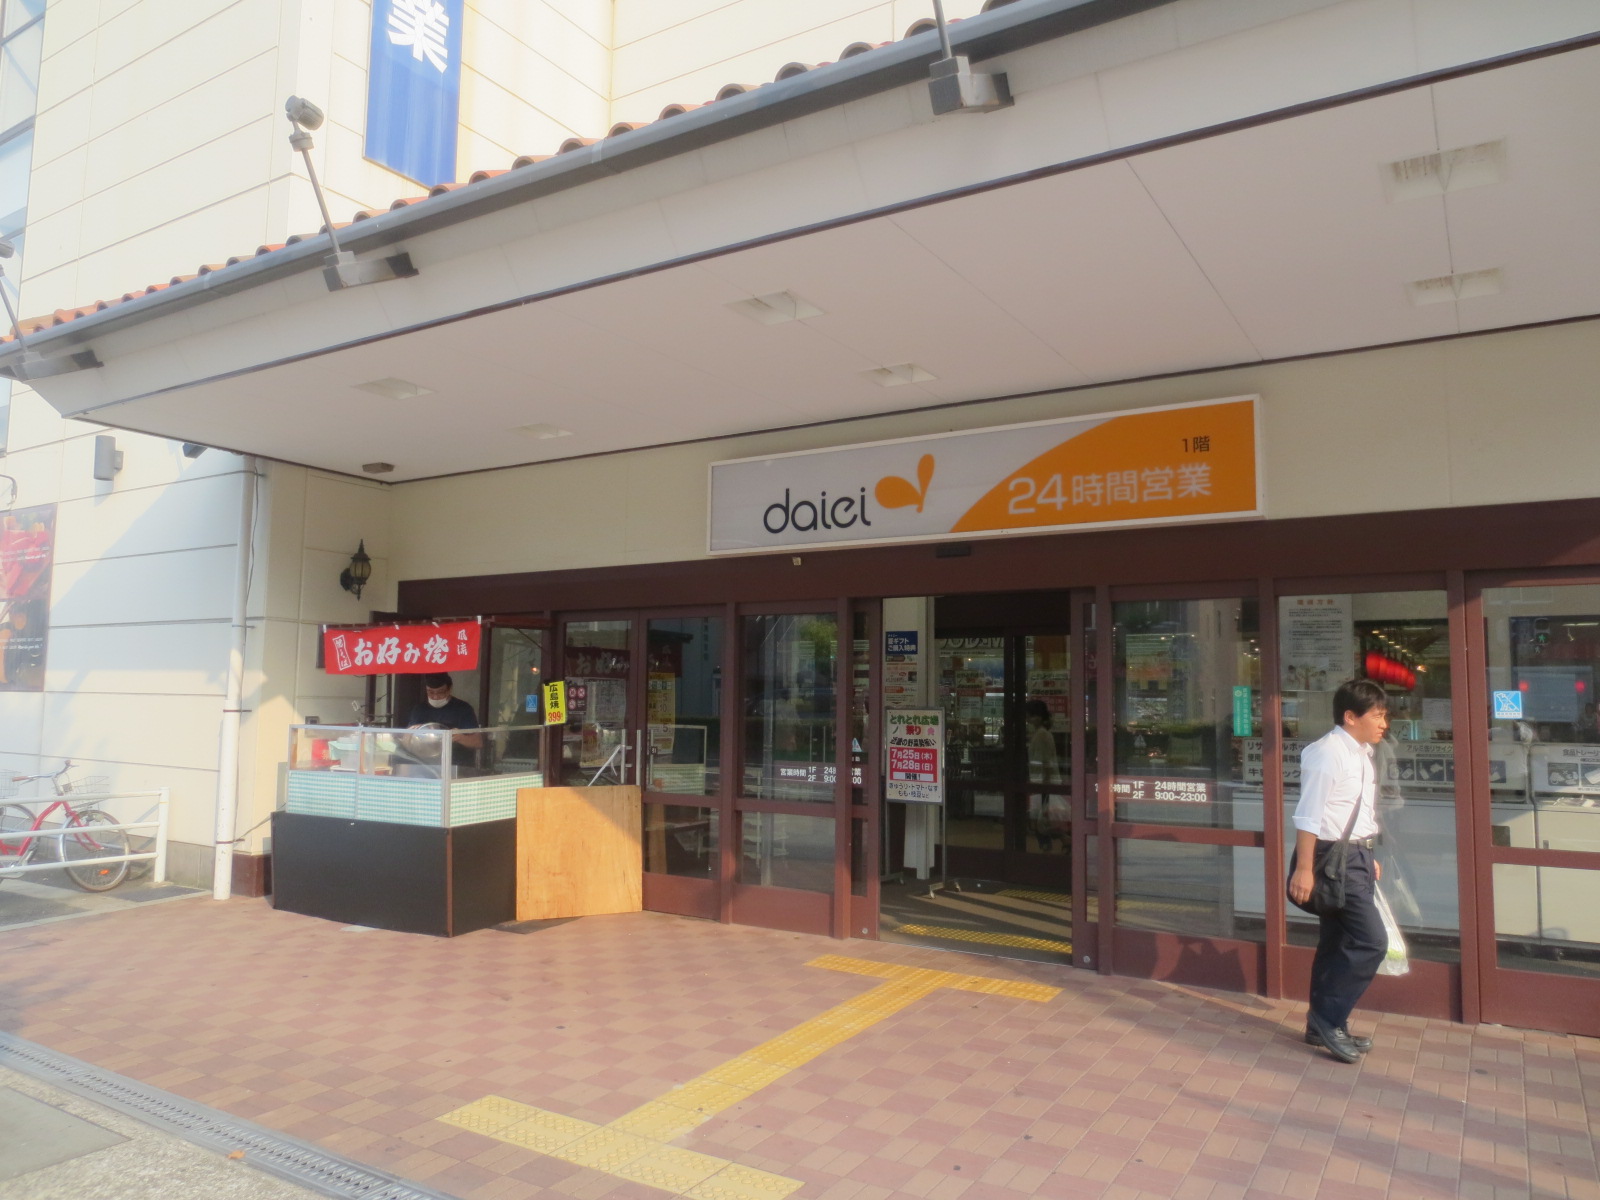 Supermarket. 273m to Daiei Konan store (Super)